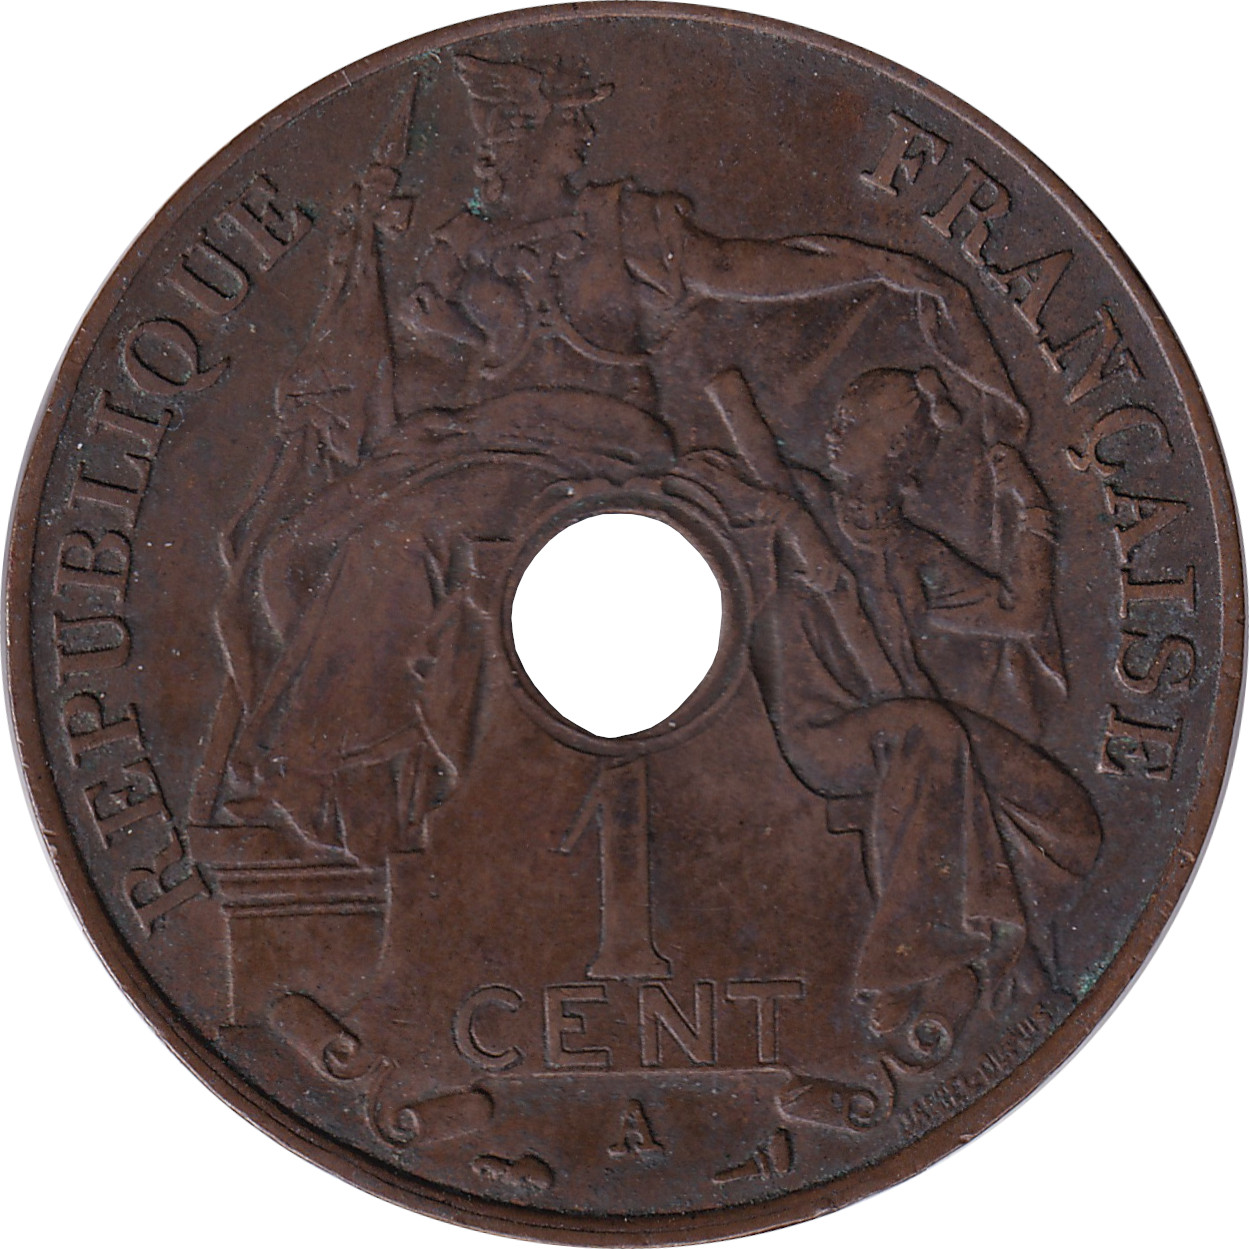 1 cent - Statue